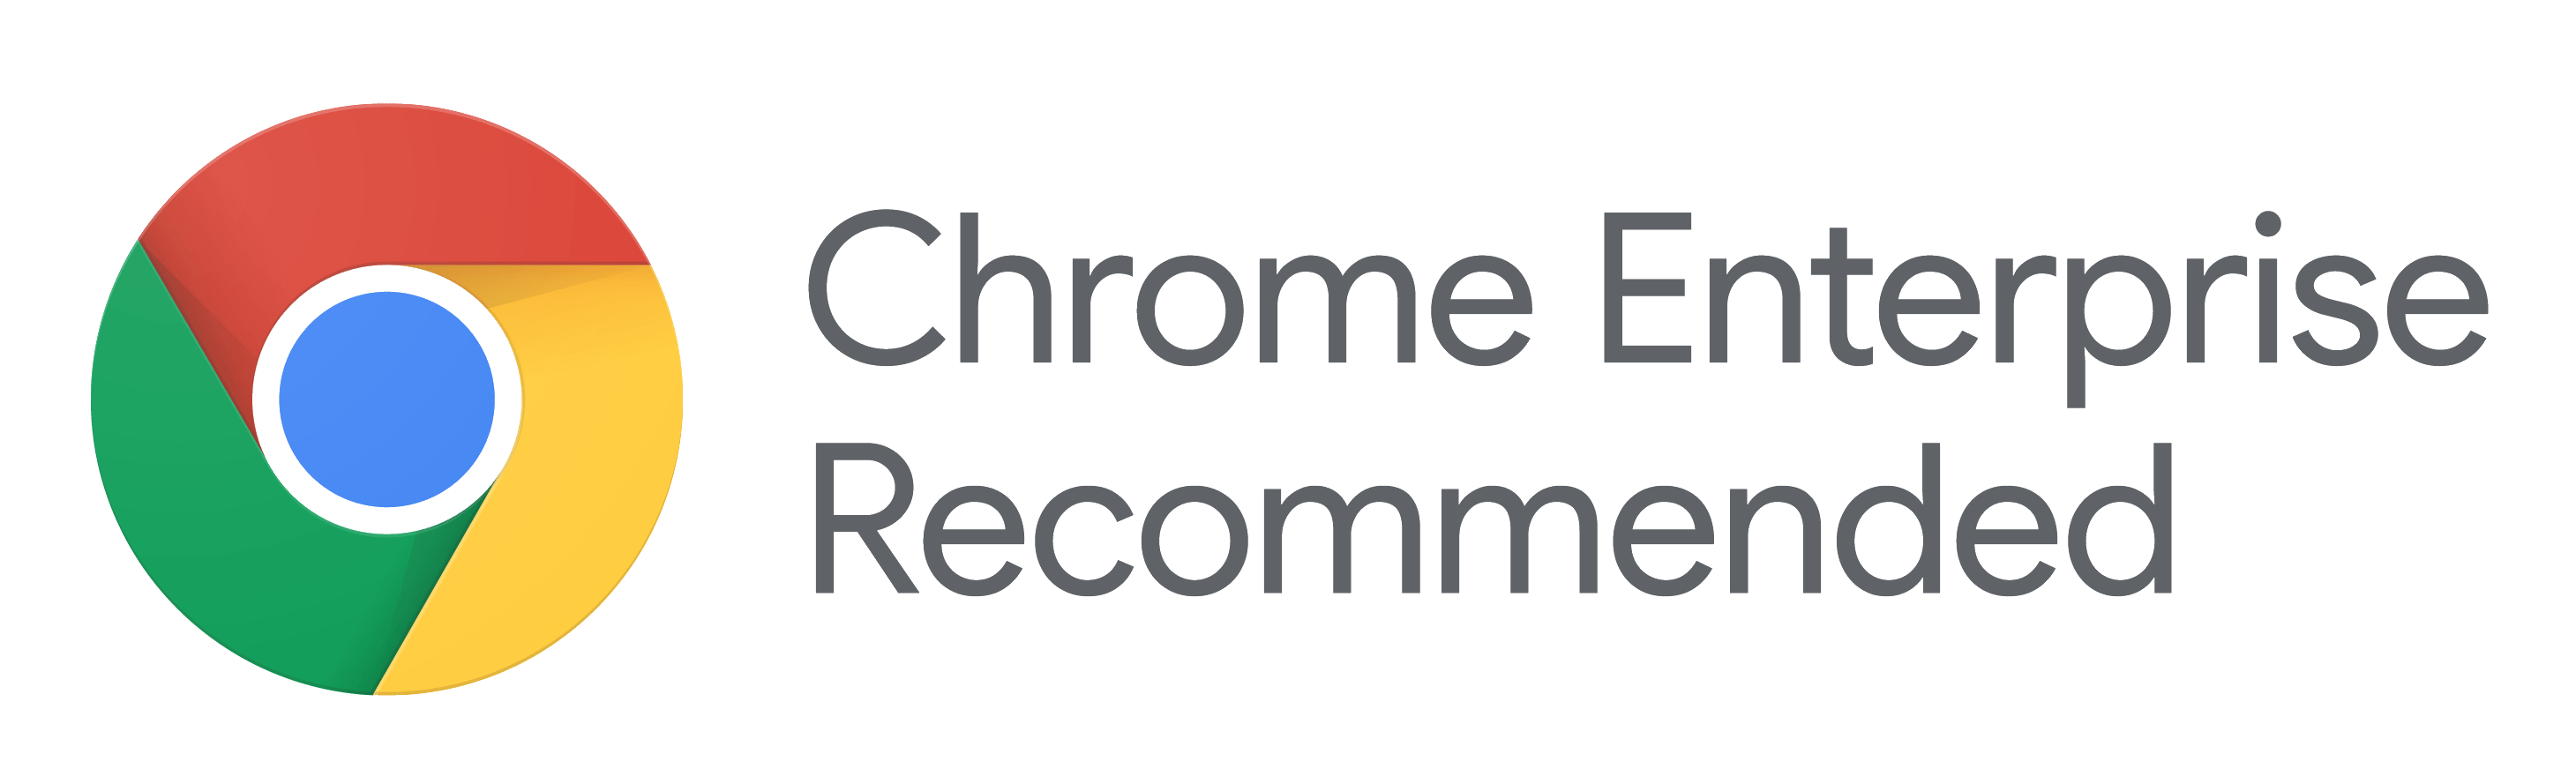 Chrome Enterprises Recommended